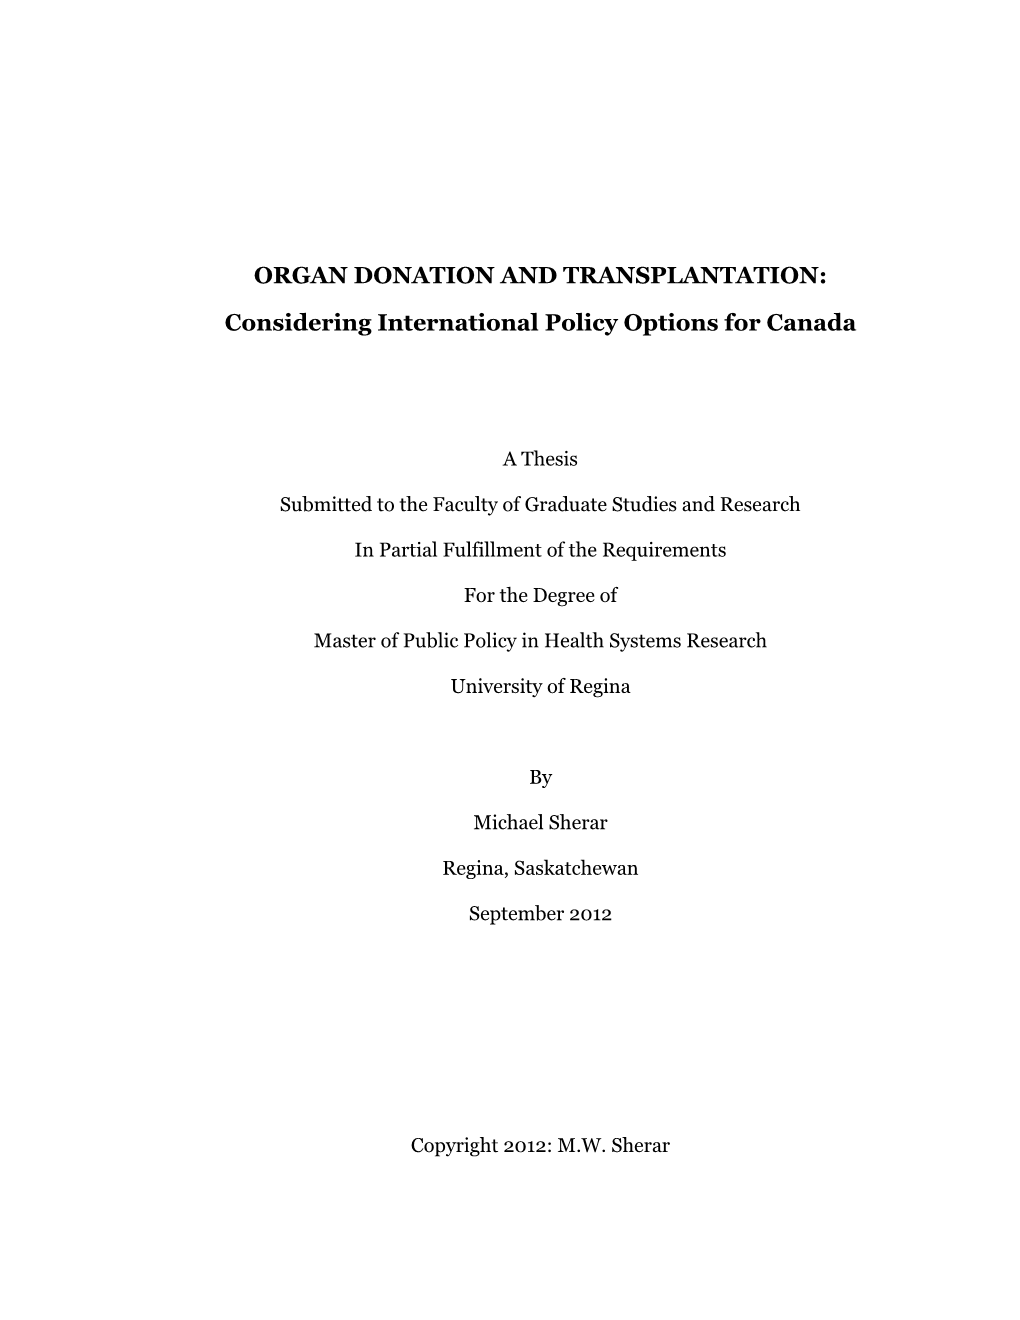 ORGAN DONATION and TRANSPLANTATION: Considering International Policy Options for Canada